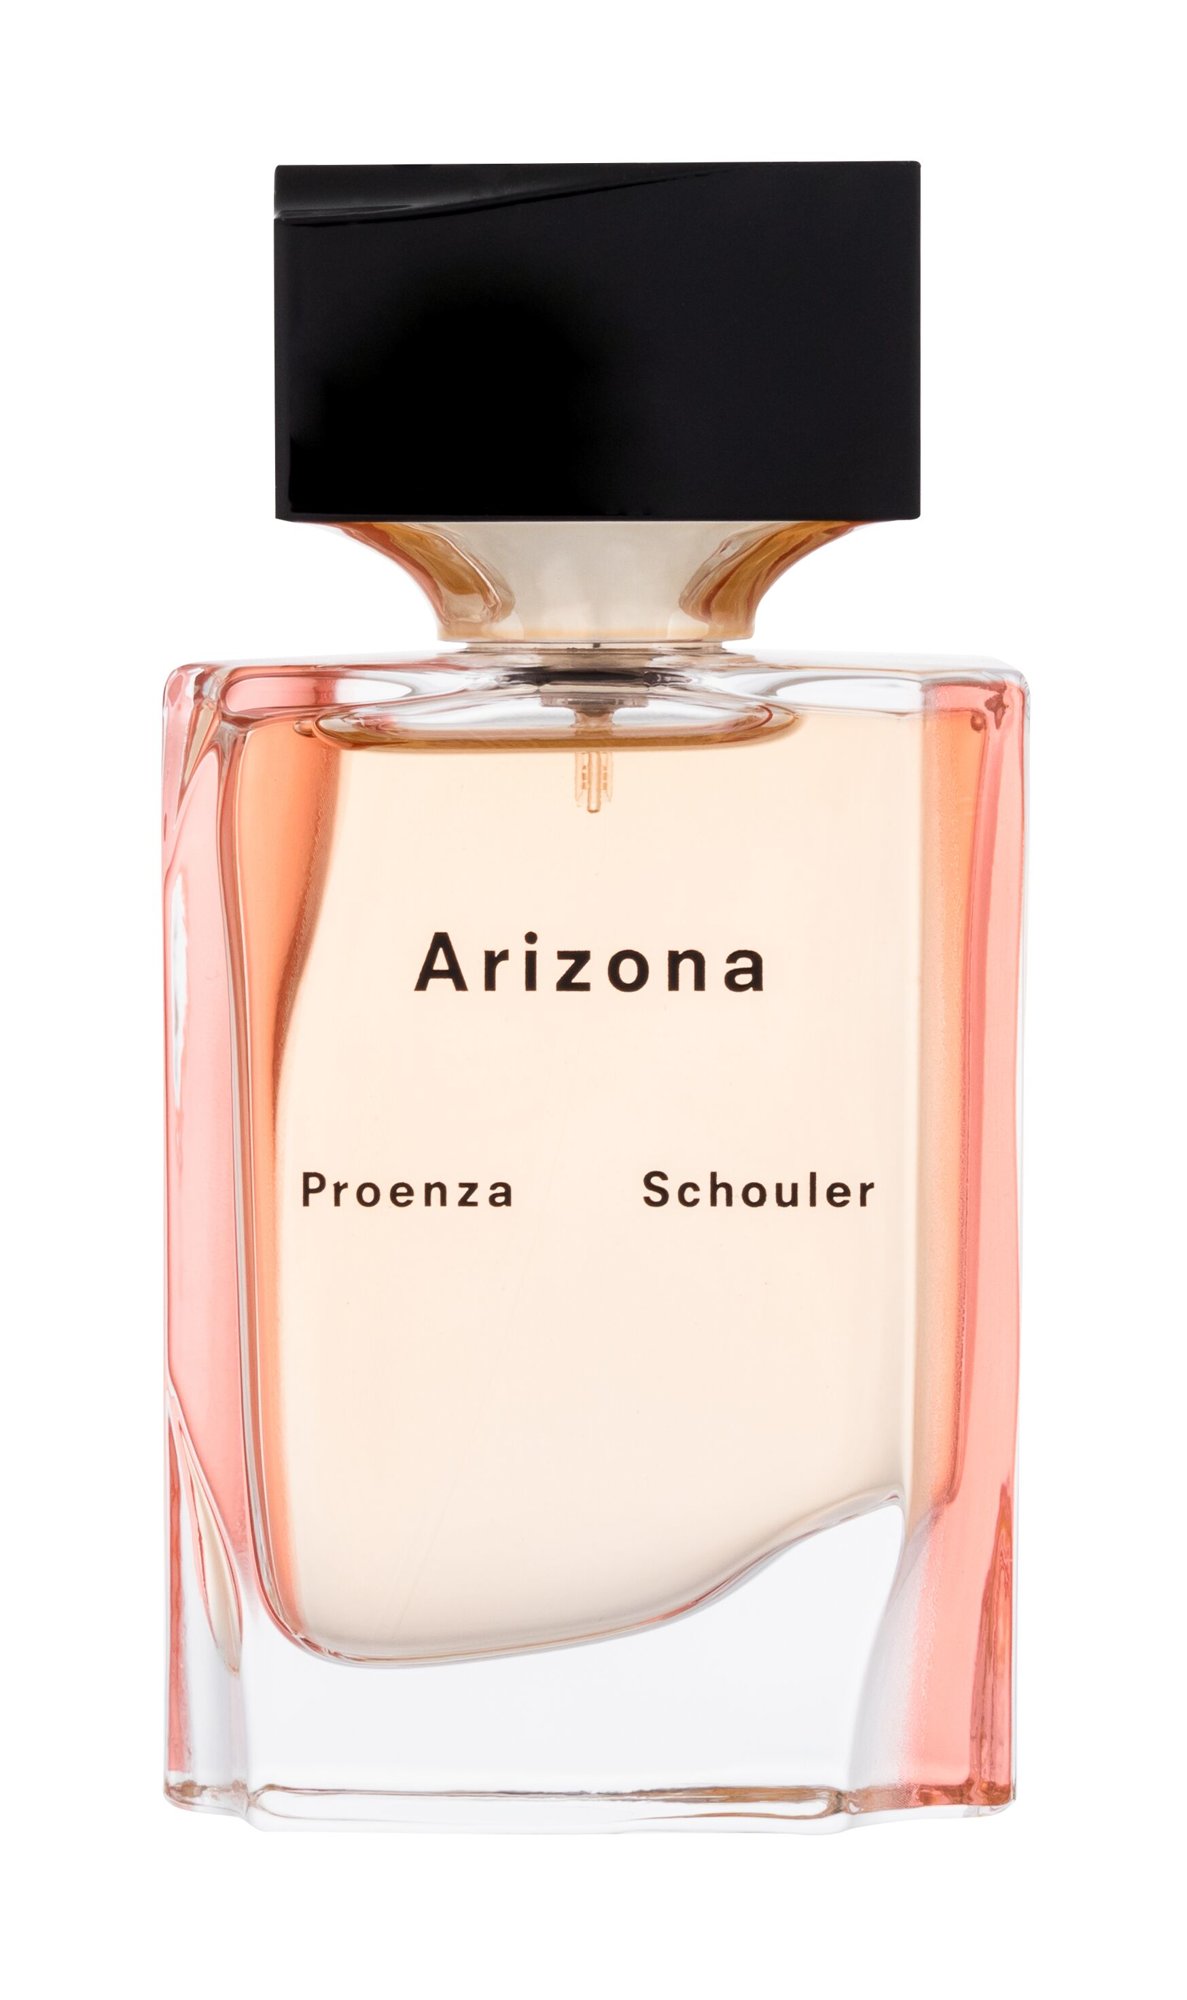 Proenza Schouler Arizona, Parfumovaná voda 50ml - Tester